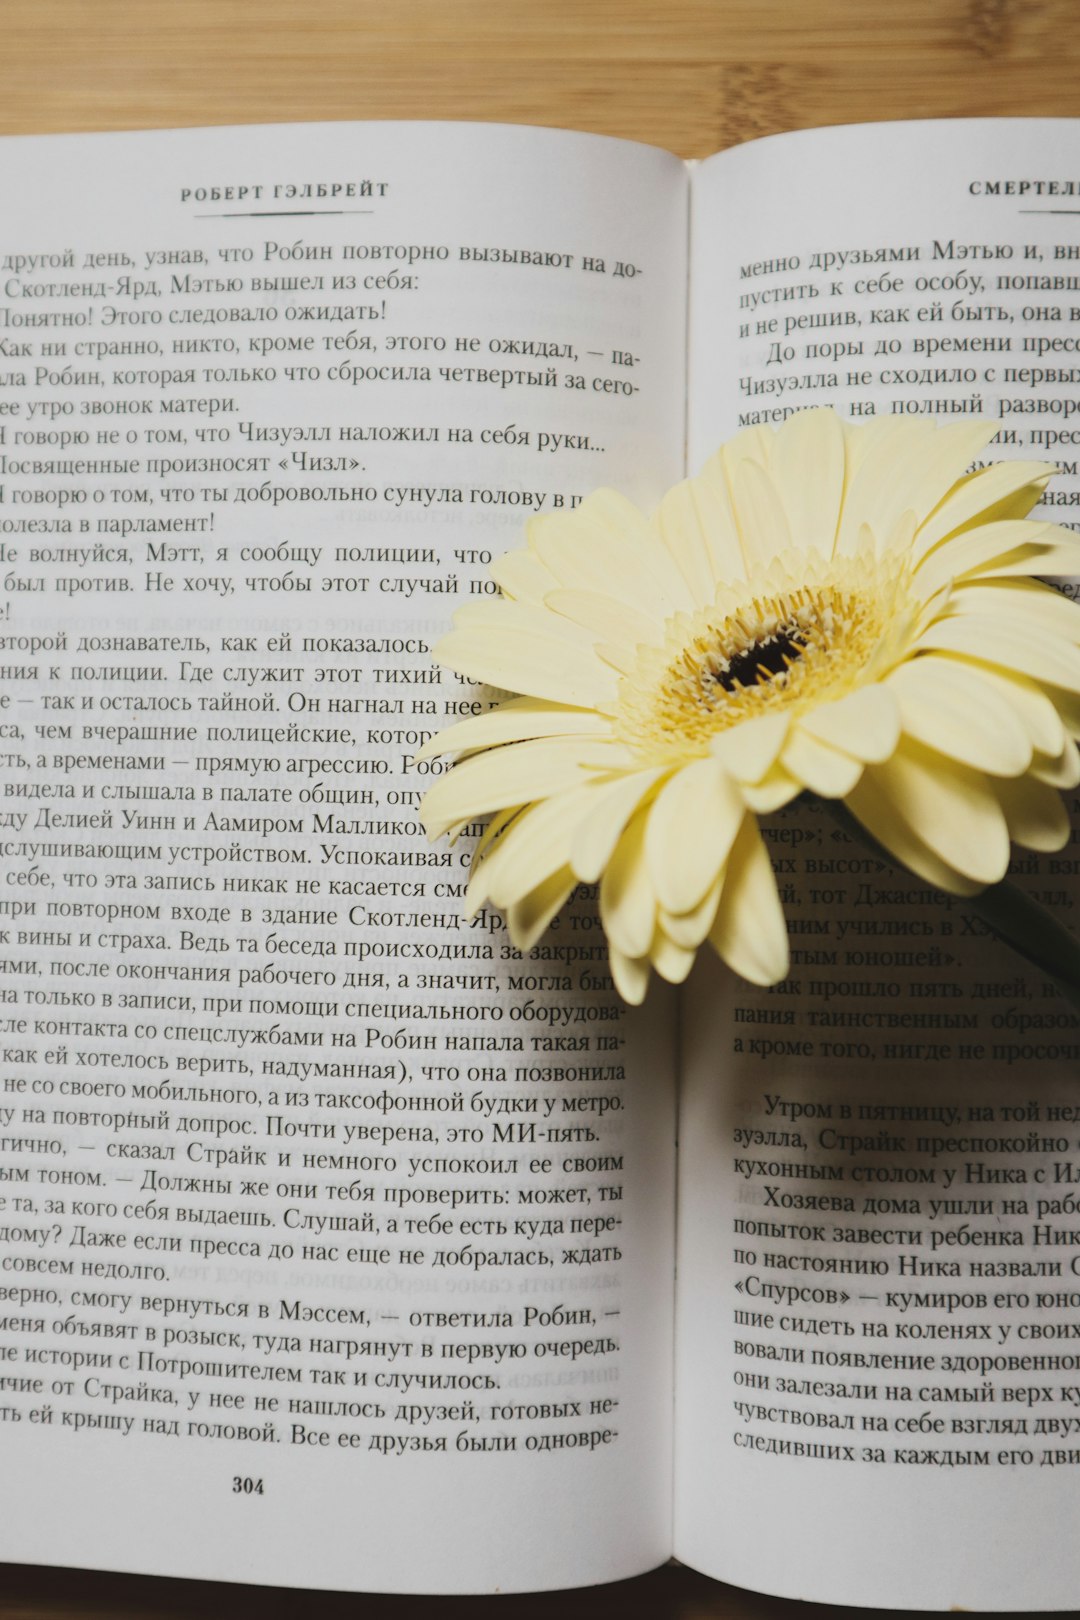 yellow gerbera daisy on open book